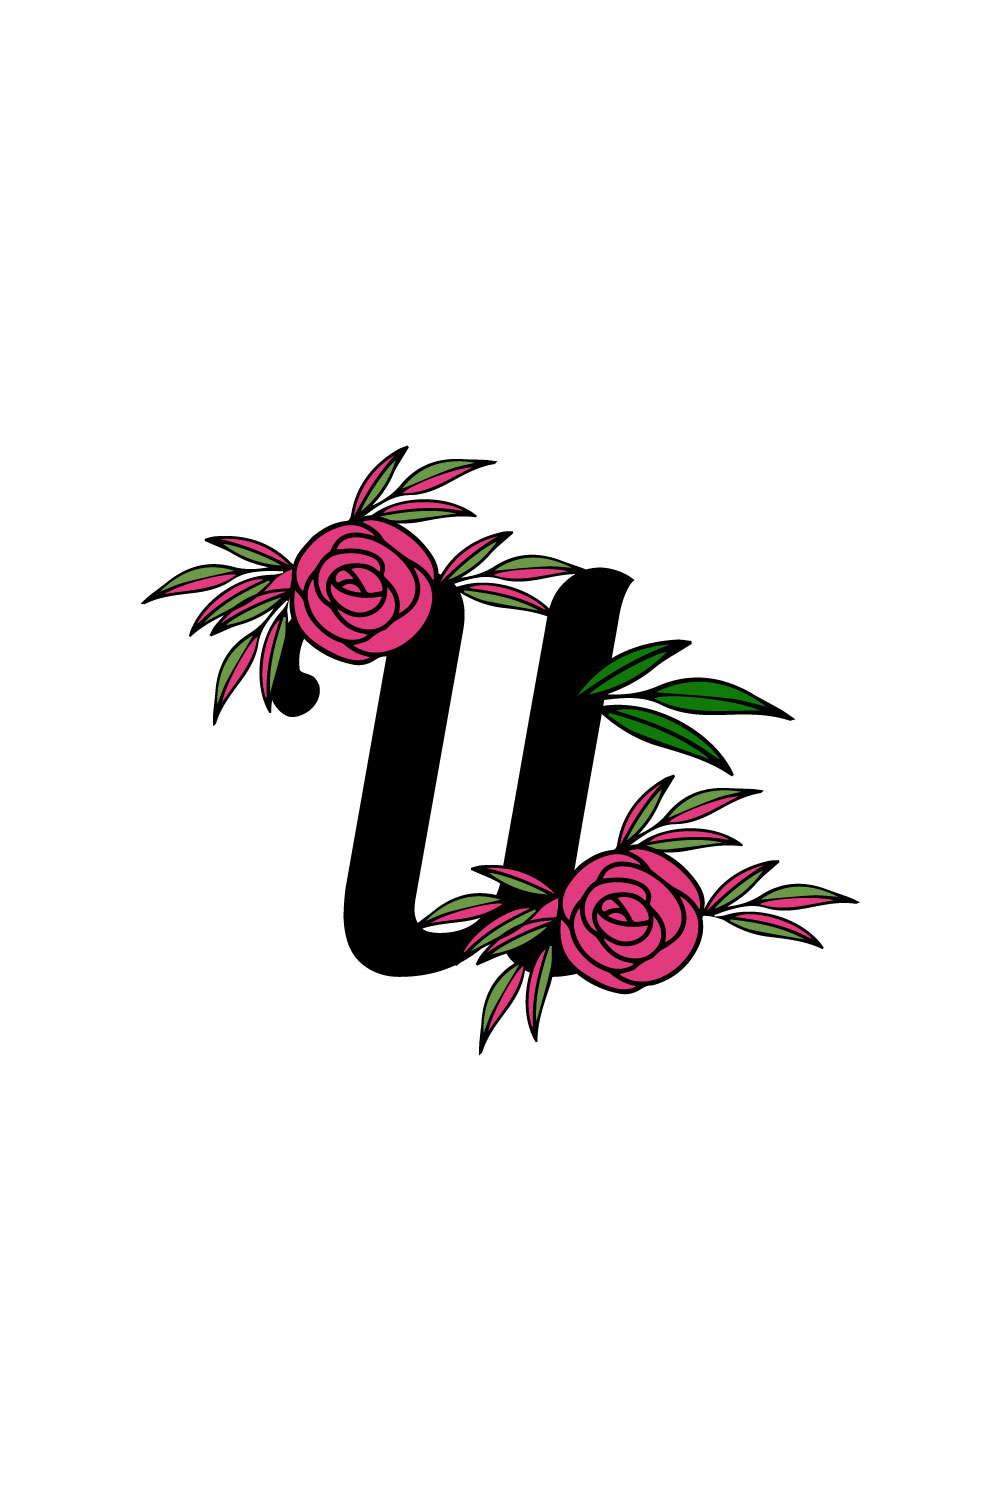 Free U rose wildflower logo pinterest preview image.